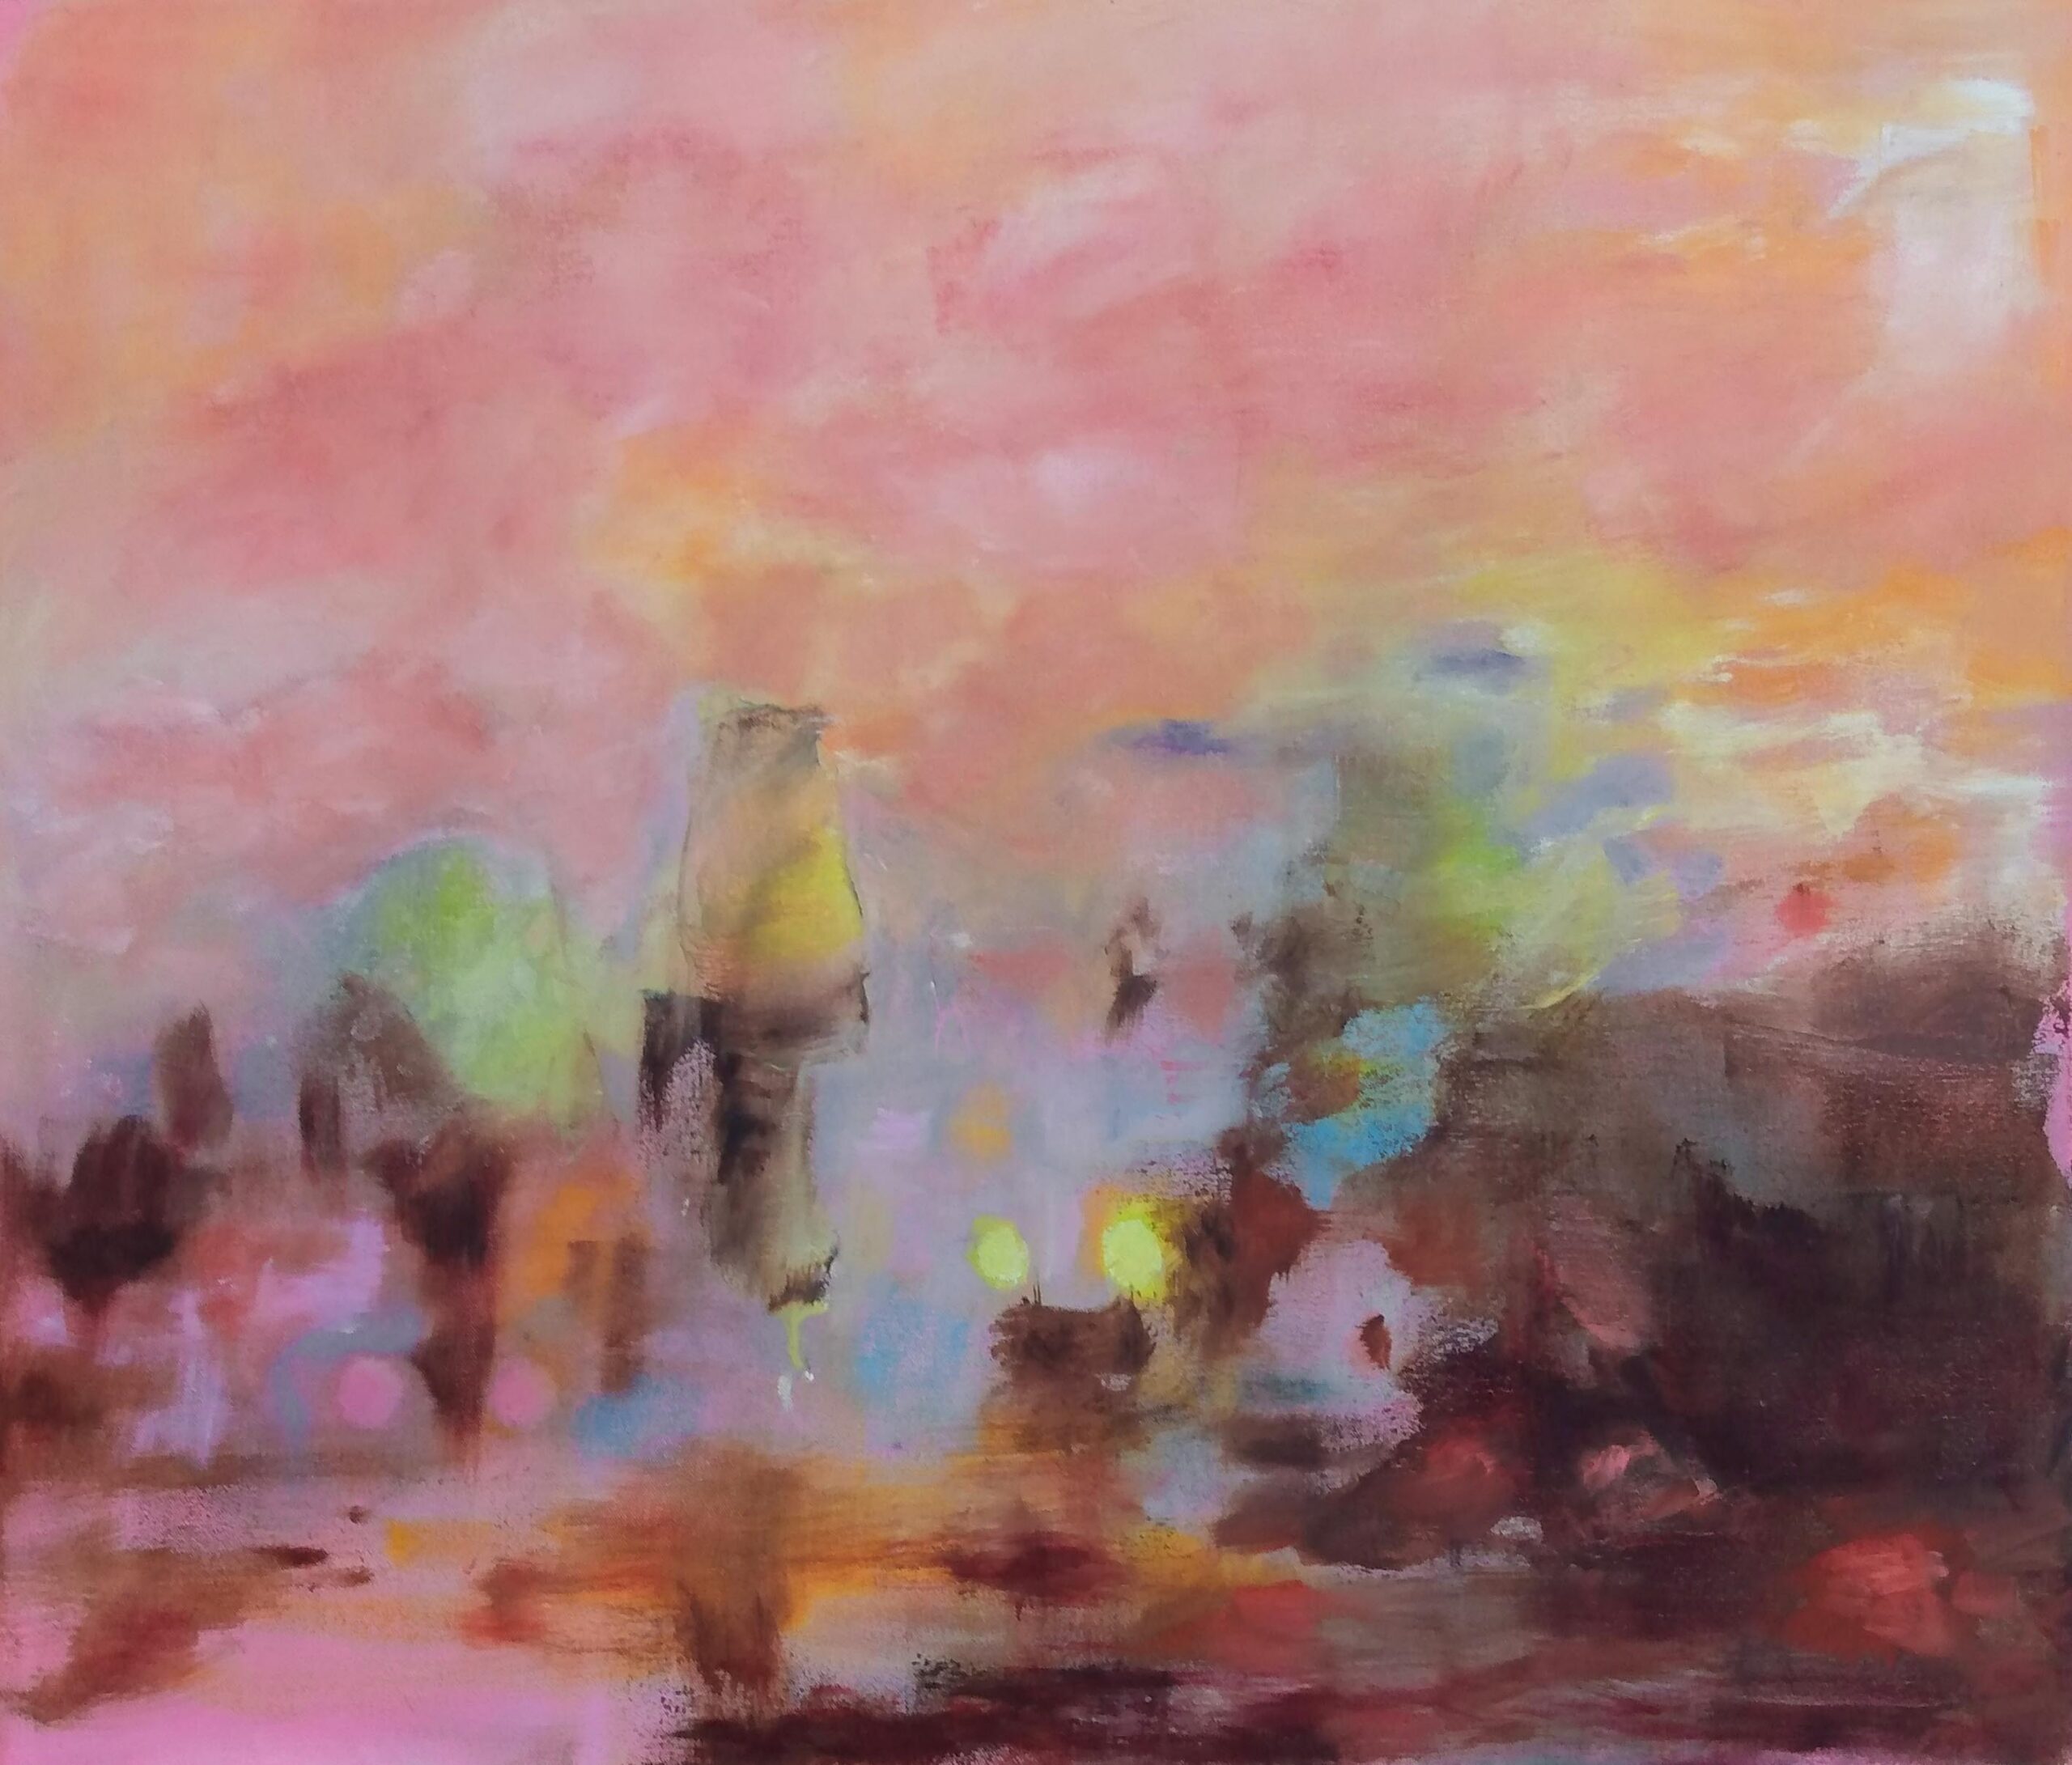 'Avenue Of Dreams', Alex McArthur, Oil on canvas, 60 x 69 cm